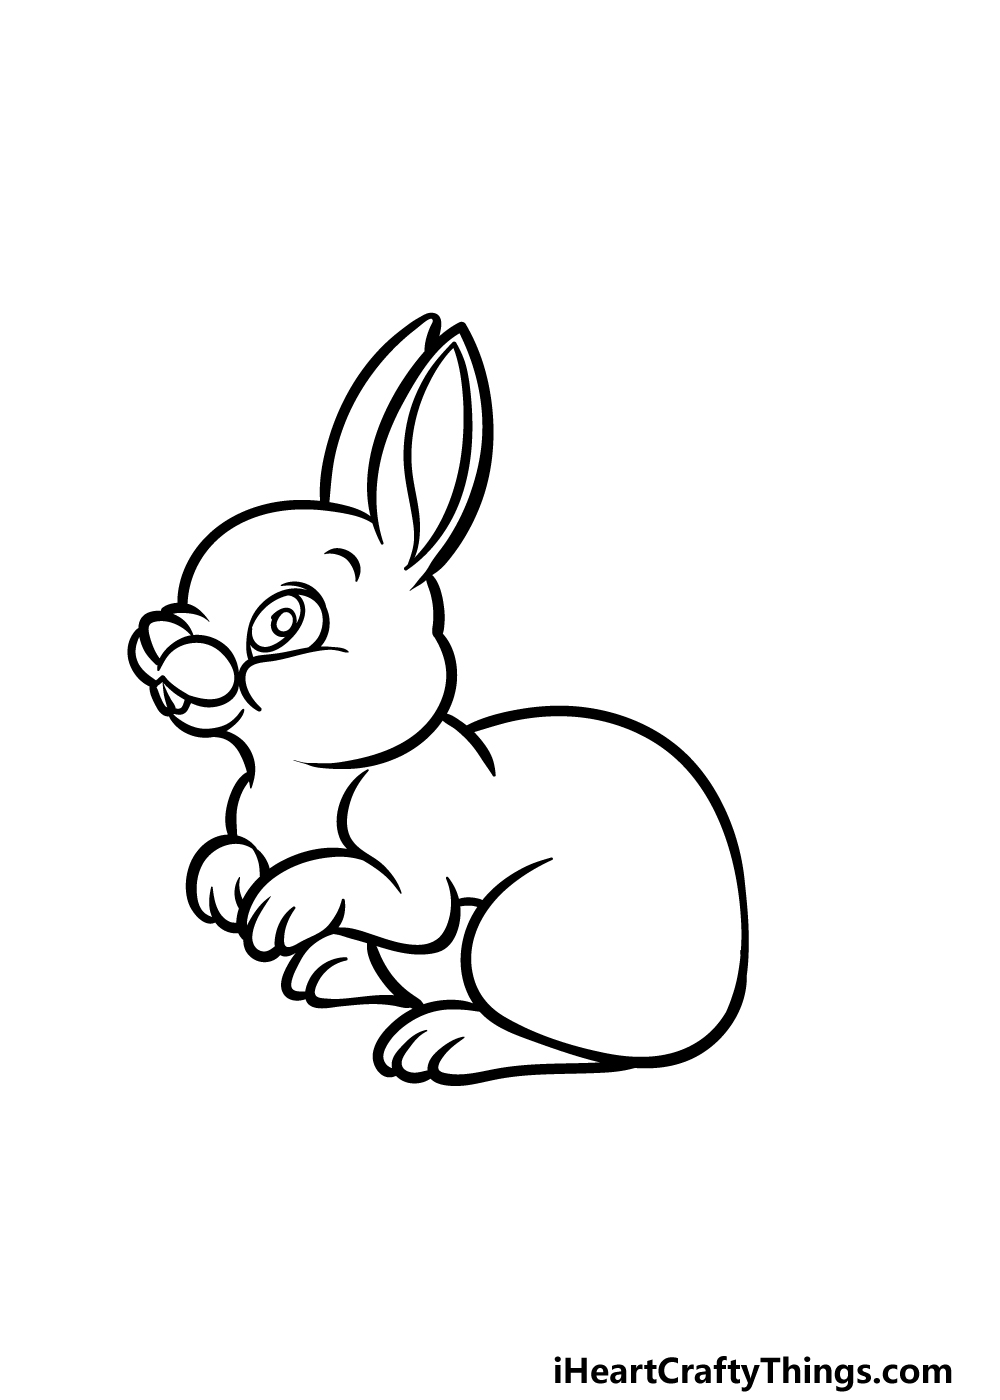 how to draw a cartoon rabbit step 4